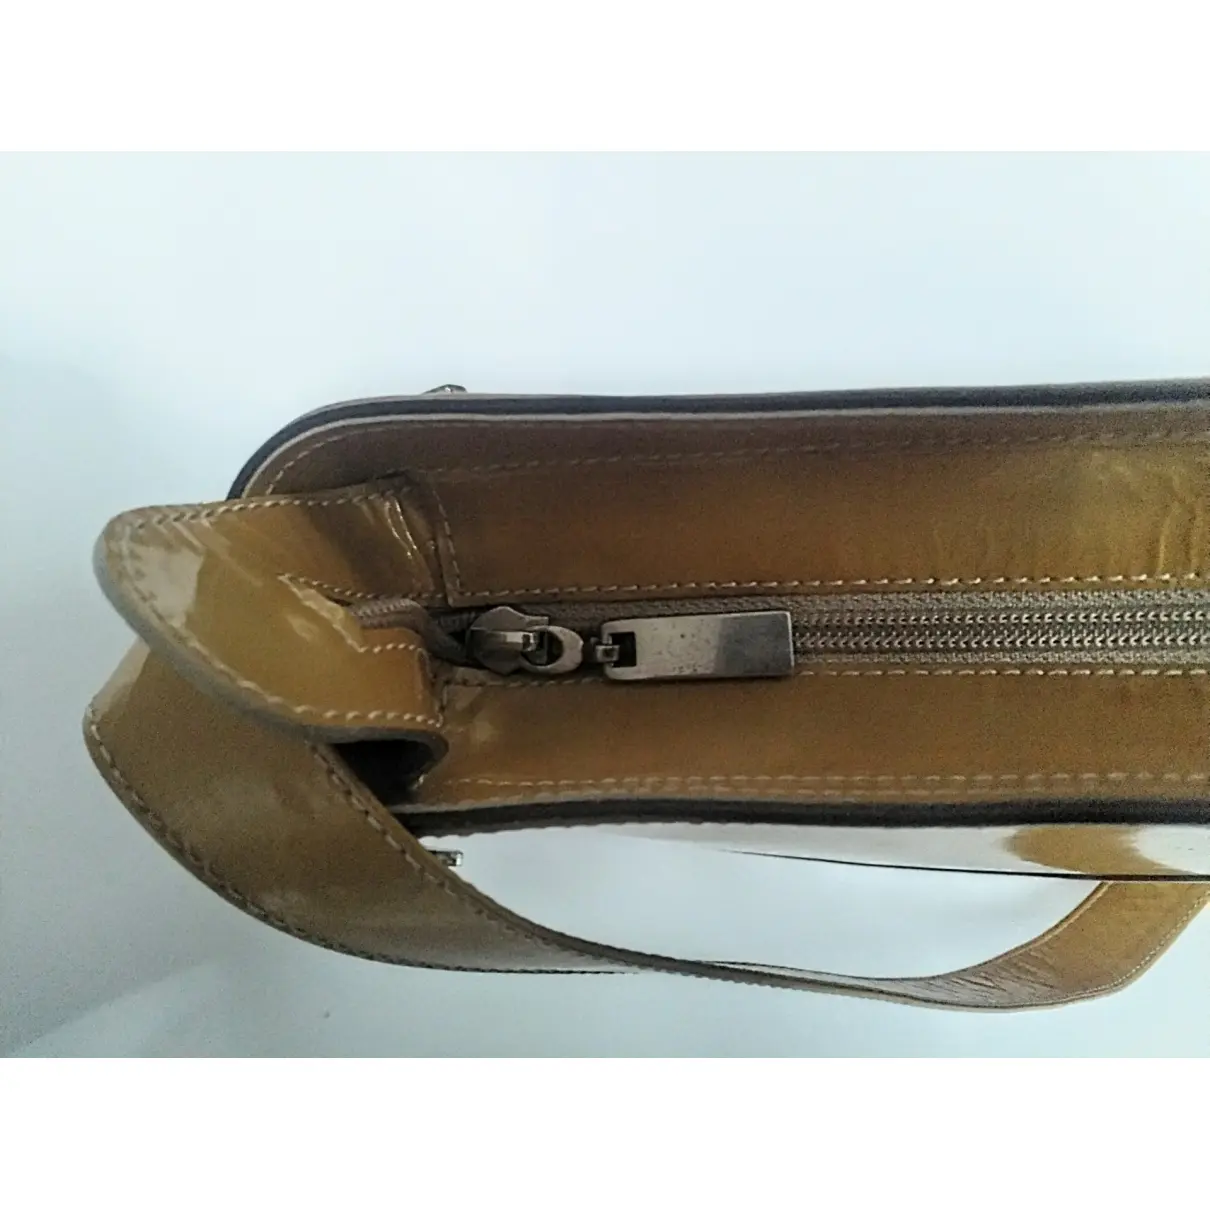 All Afternoon leather handbag Balenciaga